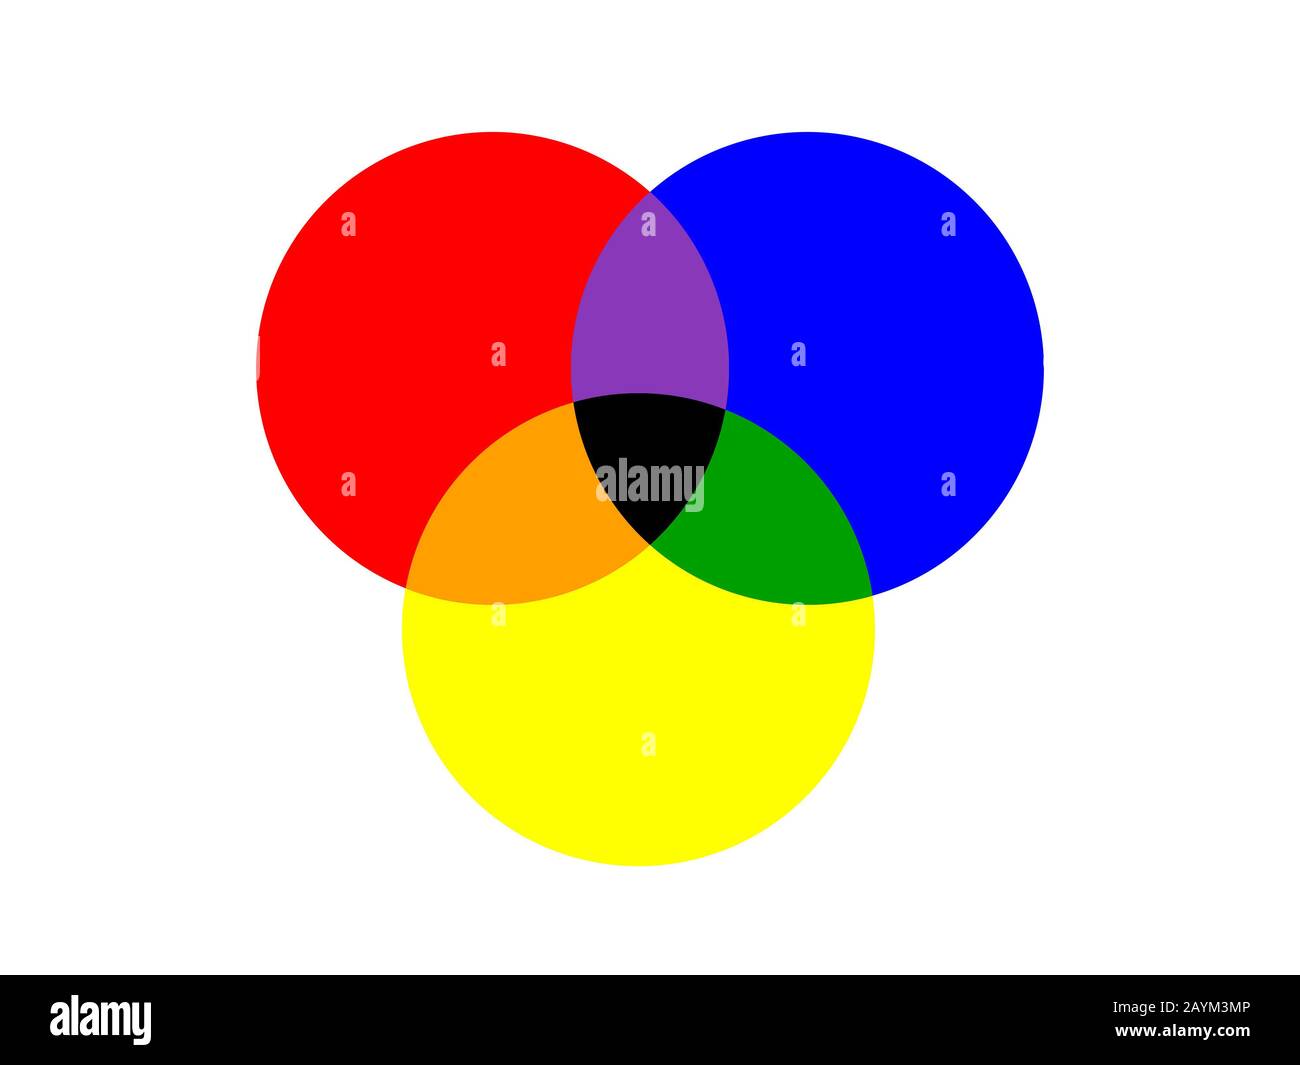 basic three circle of primary colors overlapped isolated on white background Stock Photo